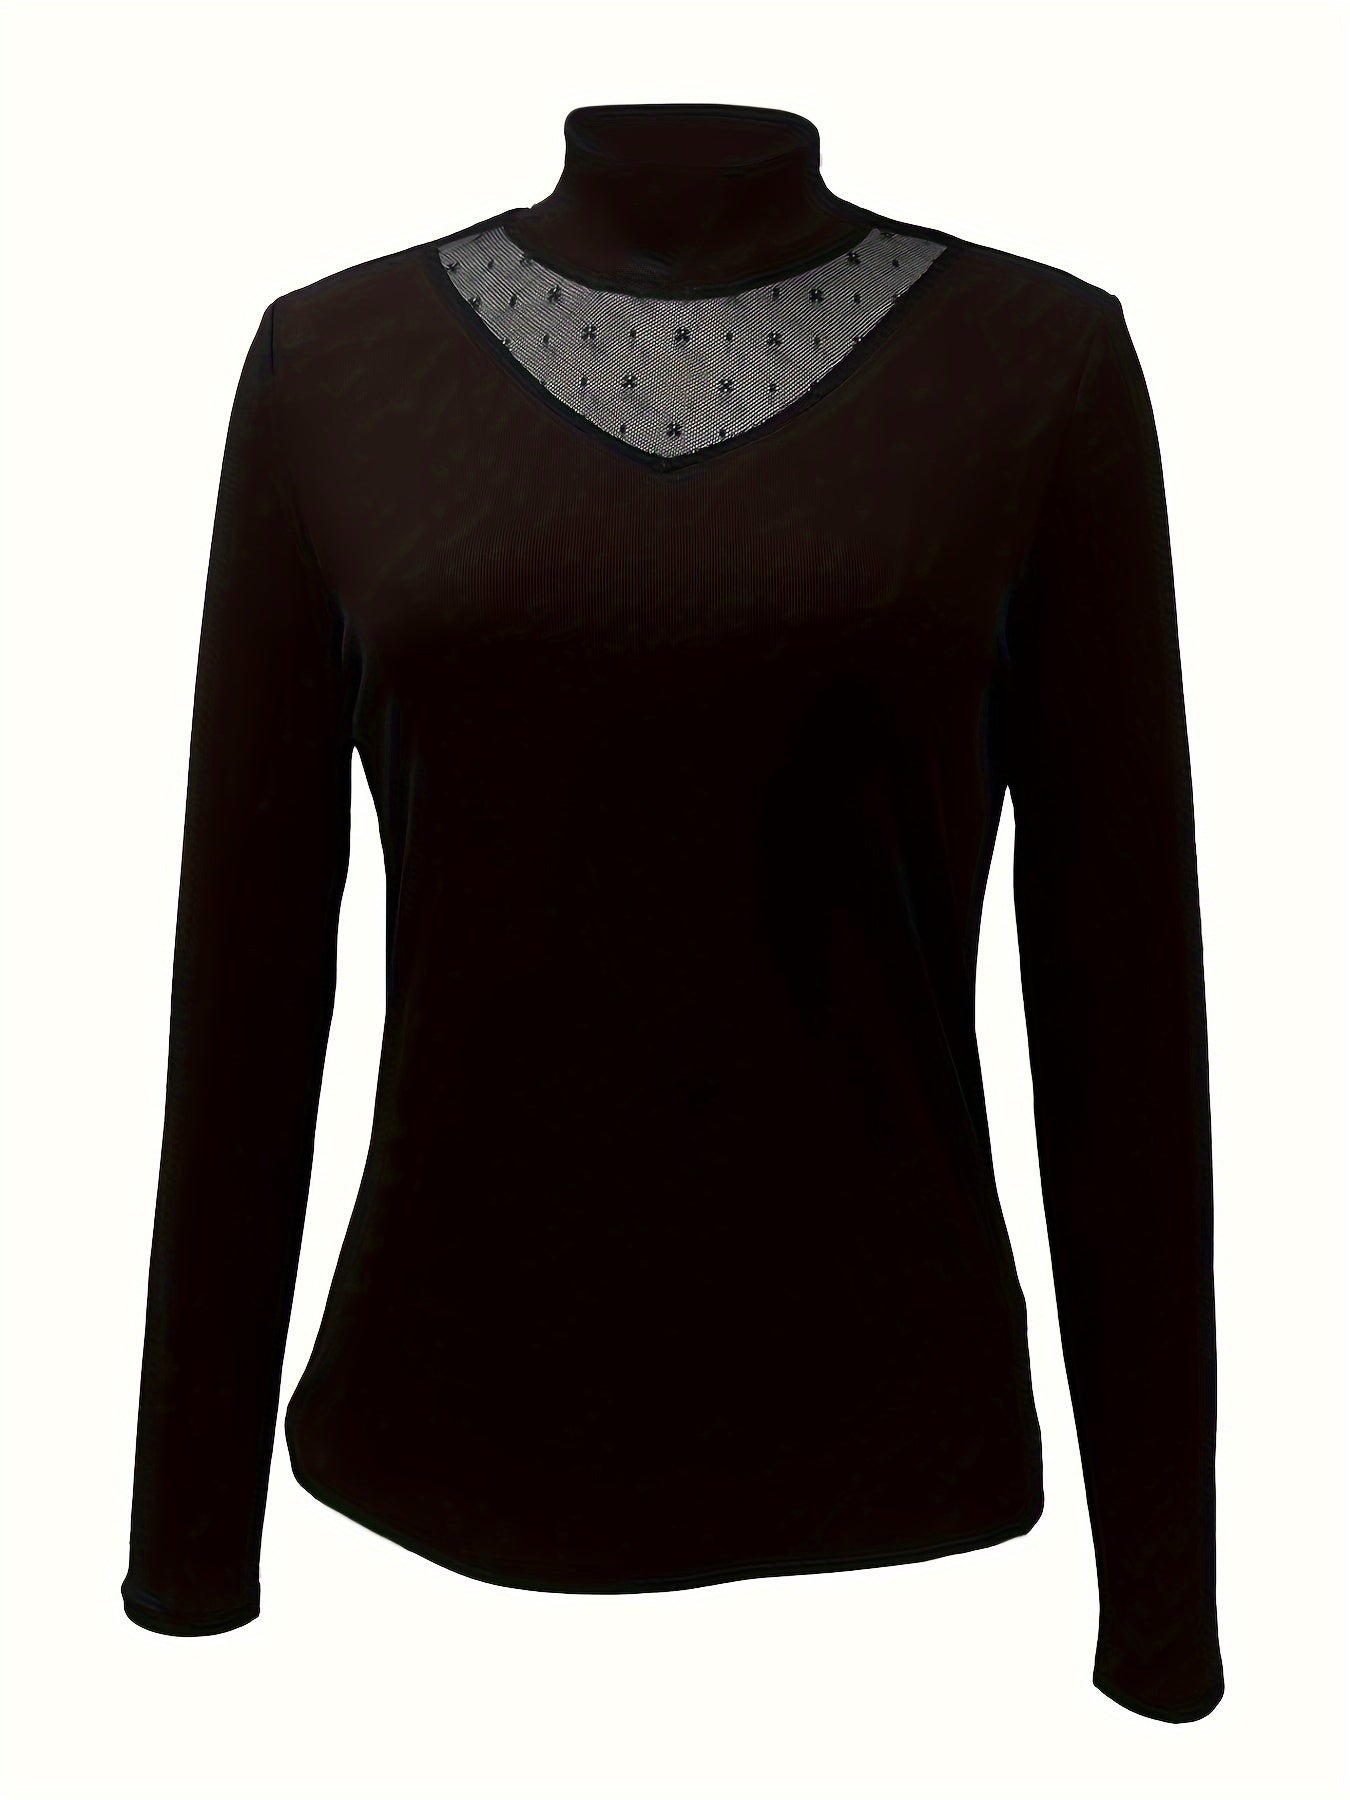 Vzyzv Contrast Mesh Mock Neck Knitted Top, Elegant Long Sleeve Slim Sweater, Women's Clothing